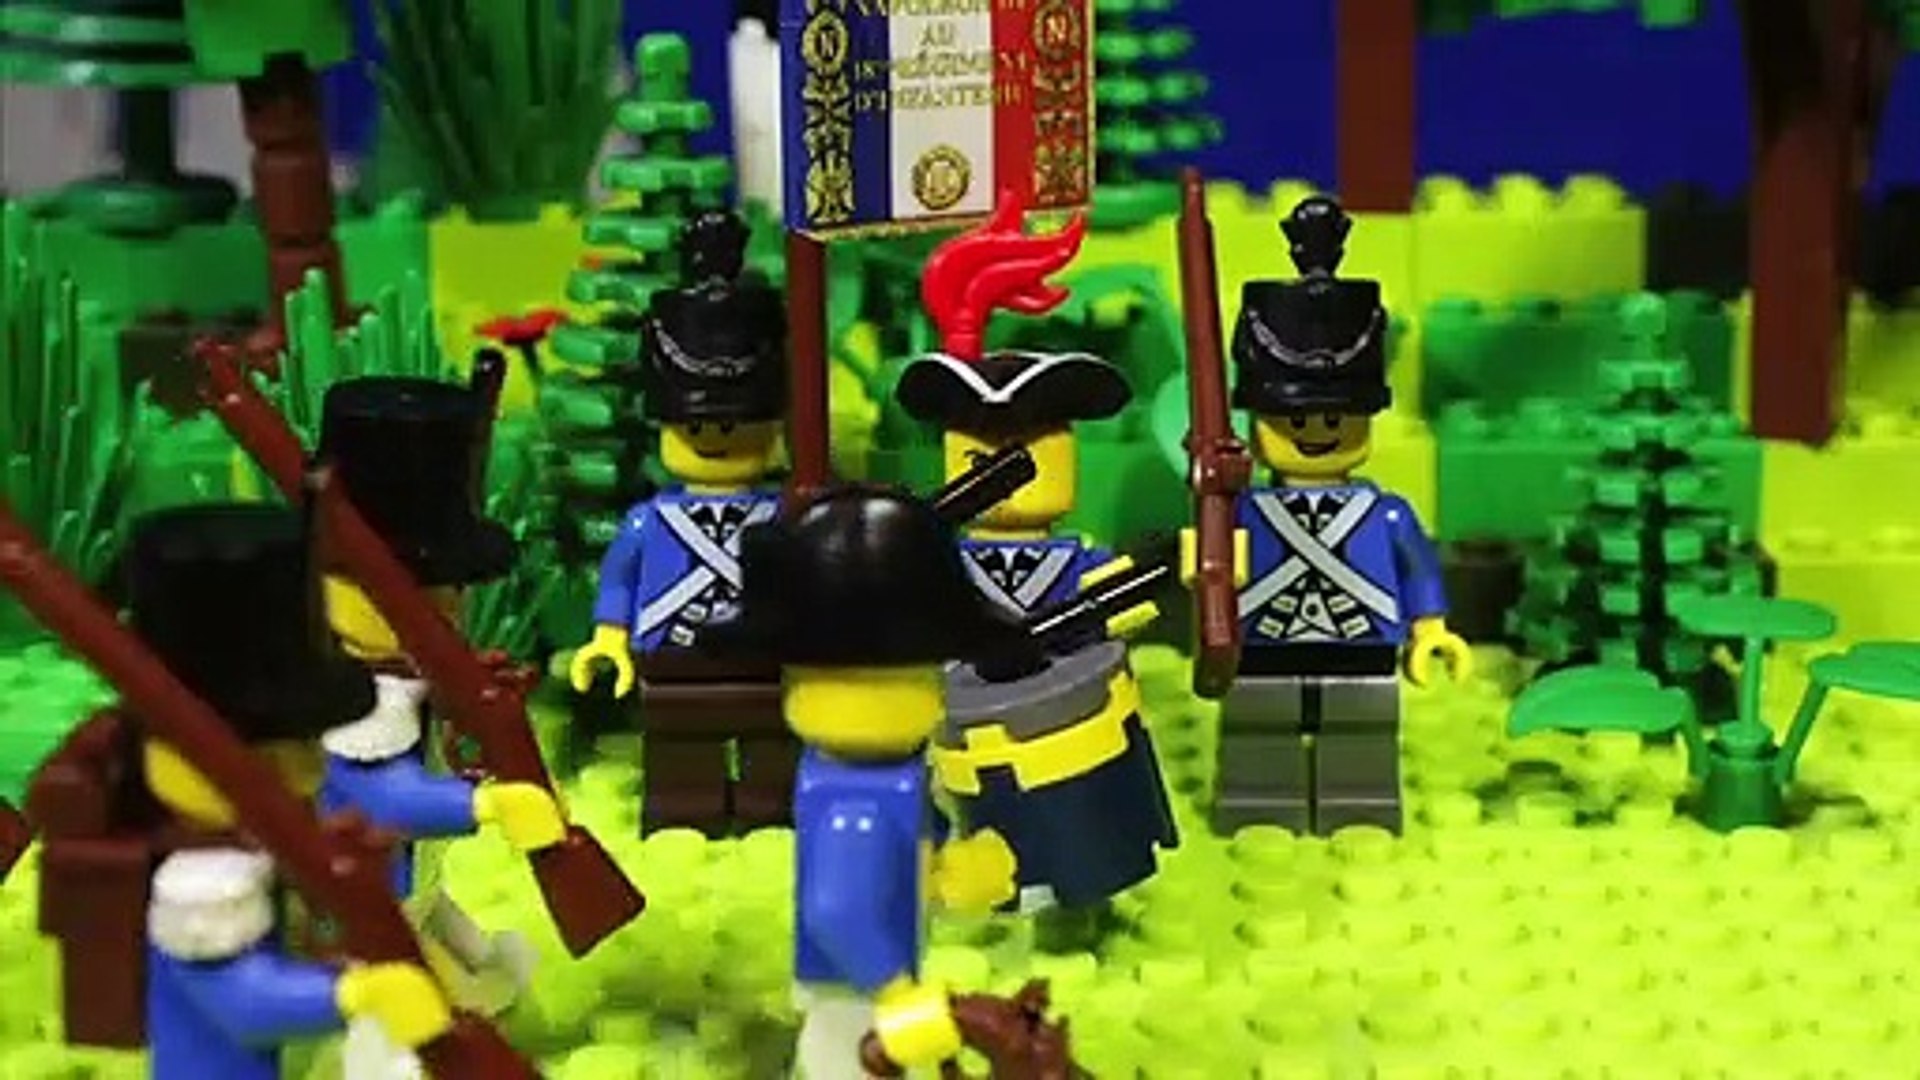 Lego Napoleonic war 1812 stopmotion - Dailymotion Video